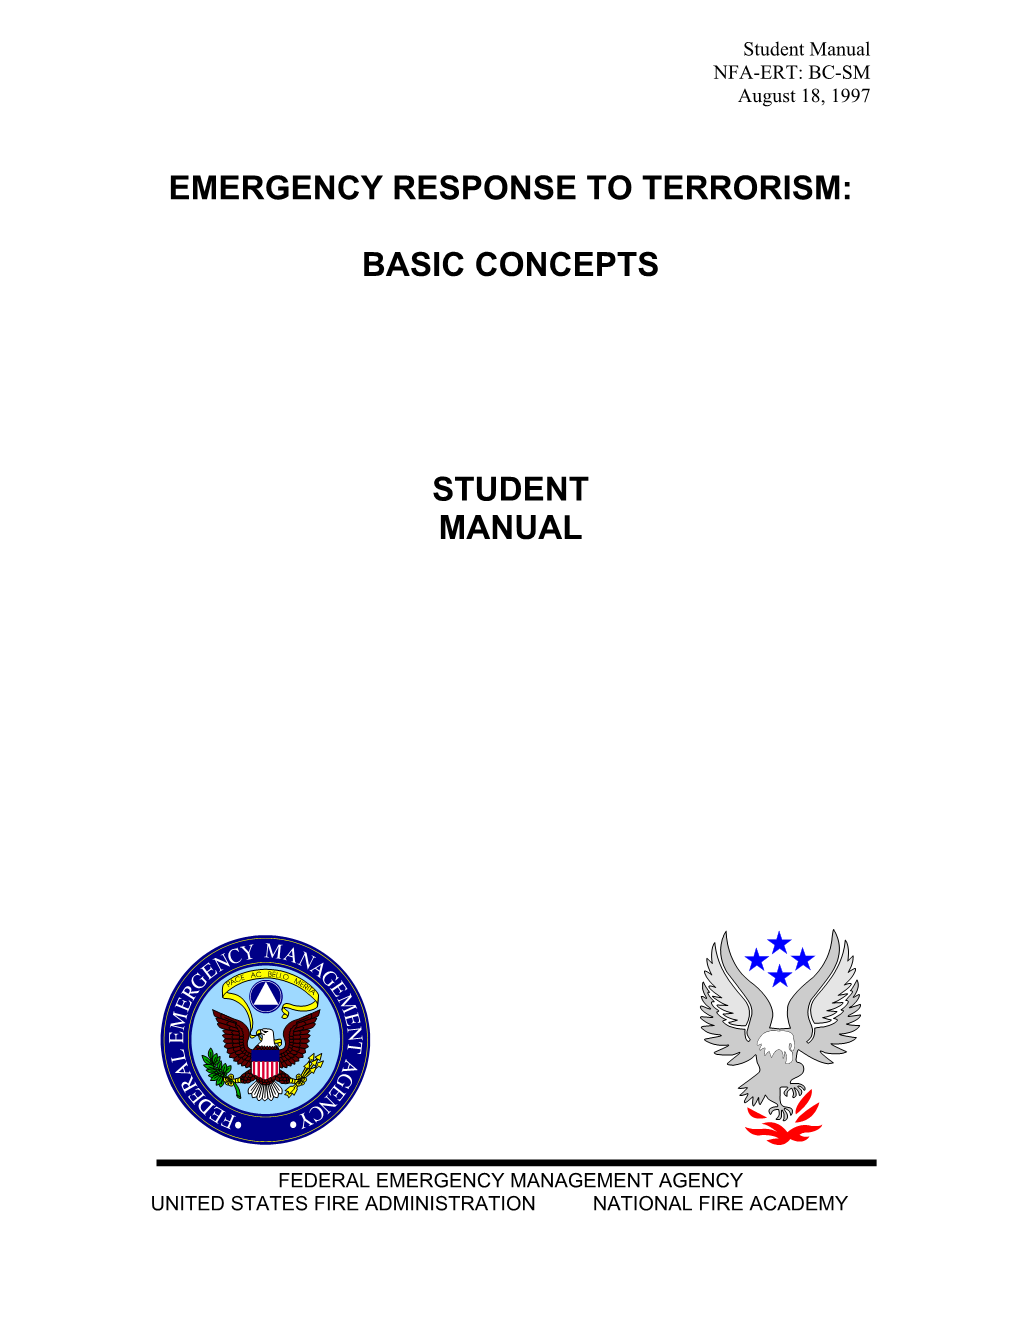 Emergency Response to Terrorism: Basic Concepts